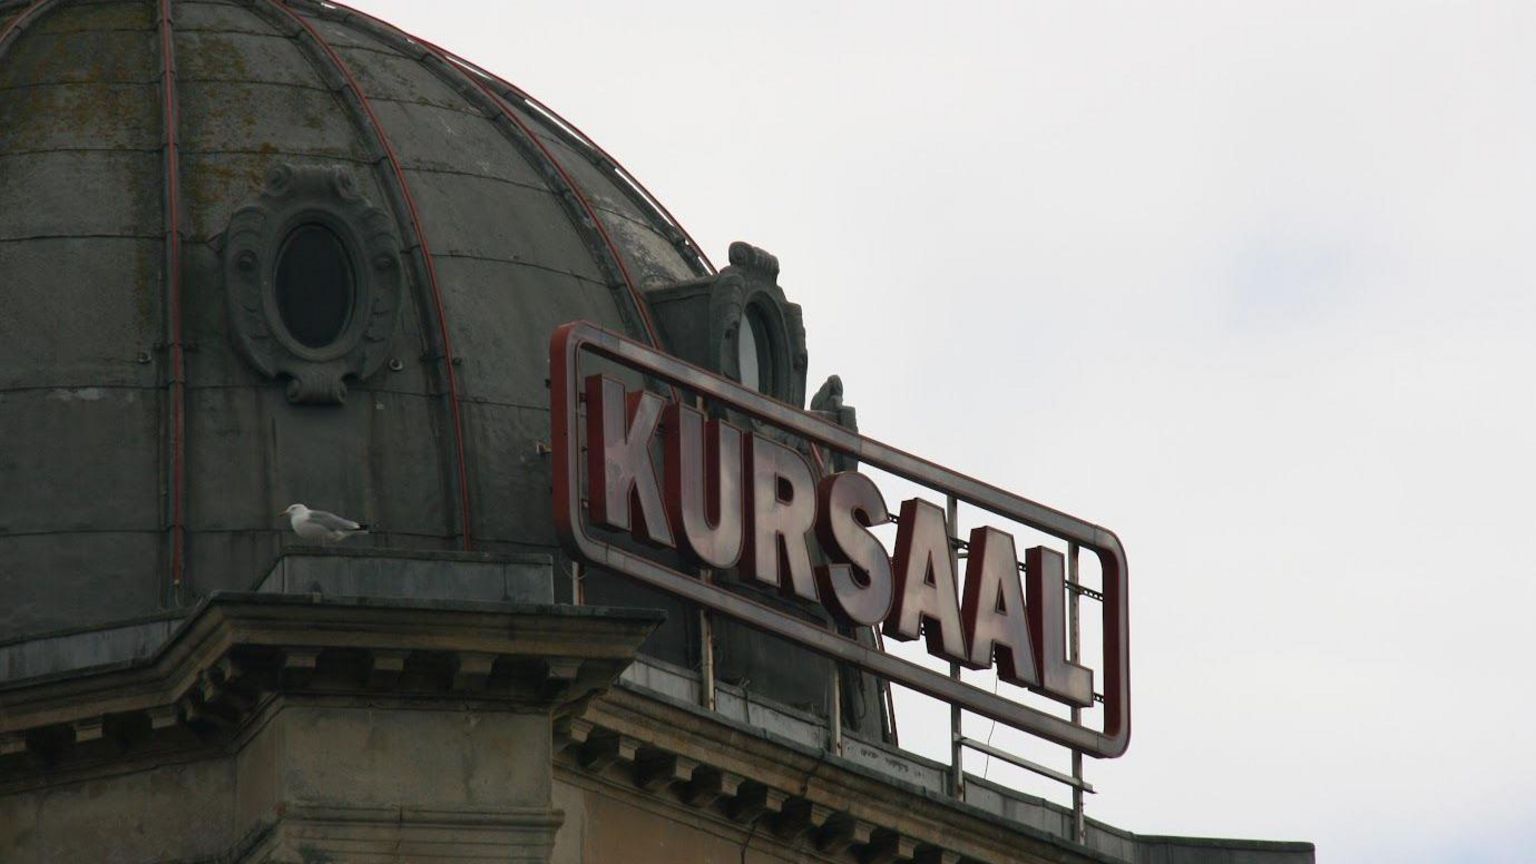 The dome of the Kursaal